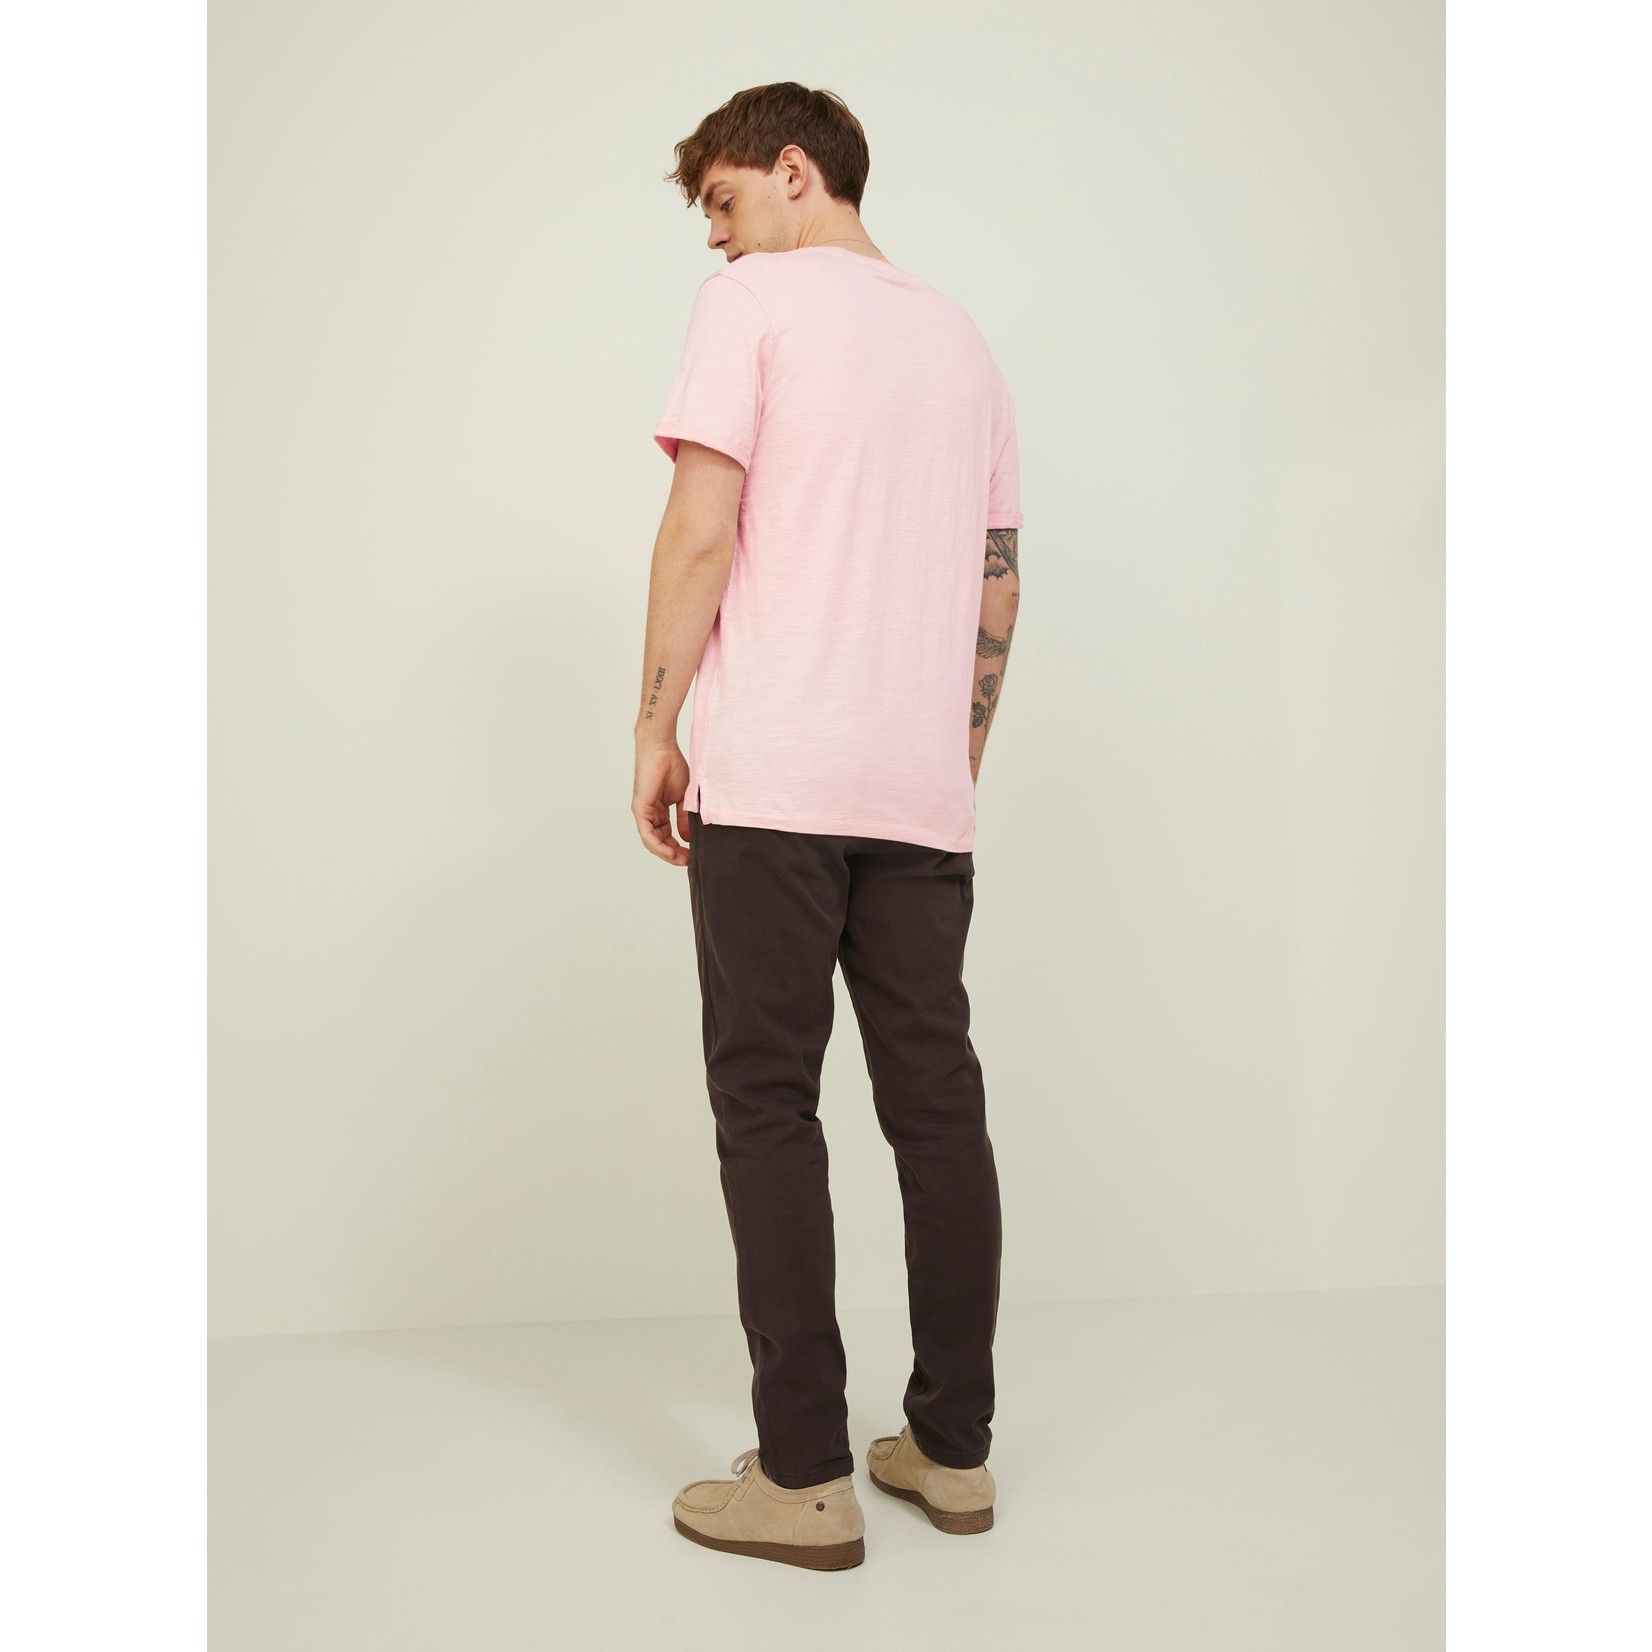 Jack & Jones T-shirt JprBlatropic Silver Pink/Surf